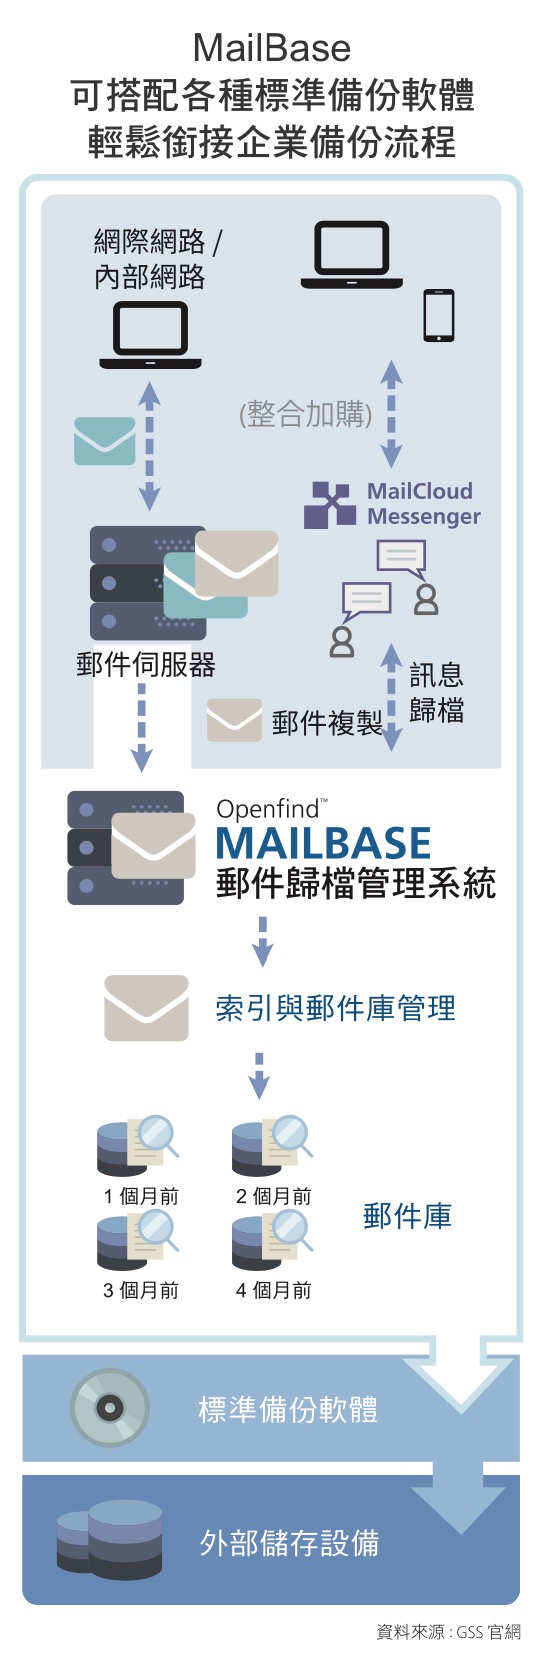 MailBase 可搭配各種標準備份軟體 輕鬆銜接企業備份流程